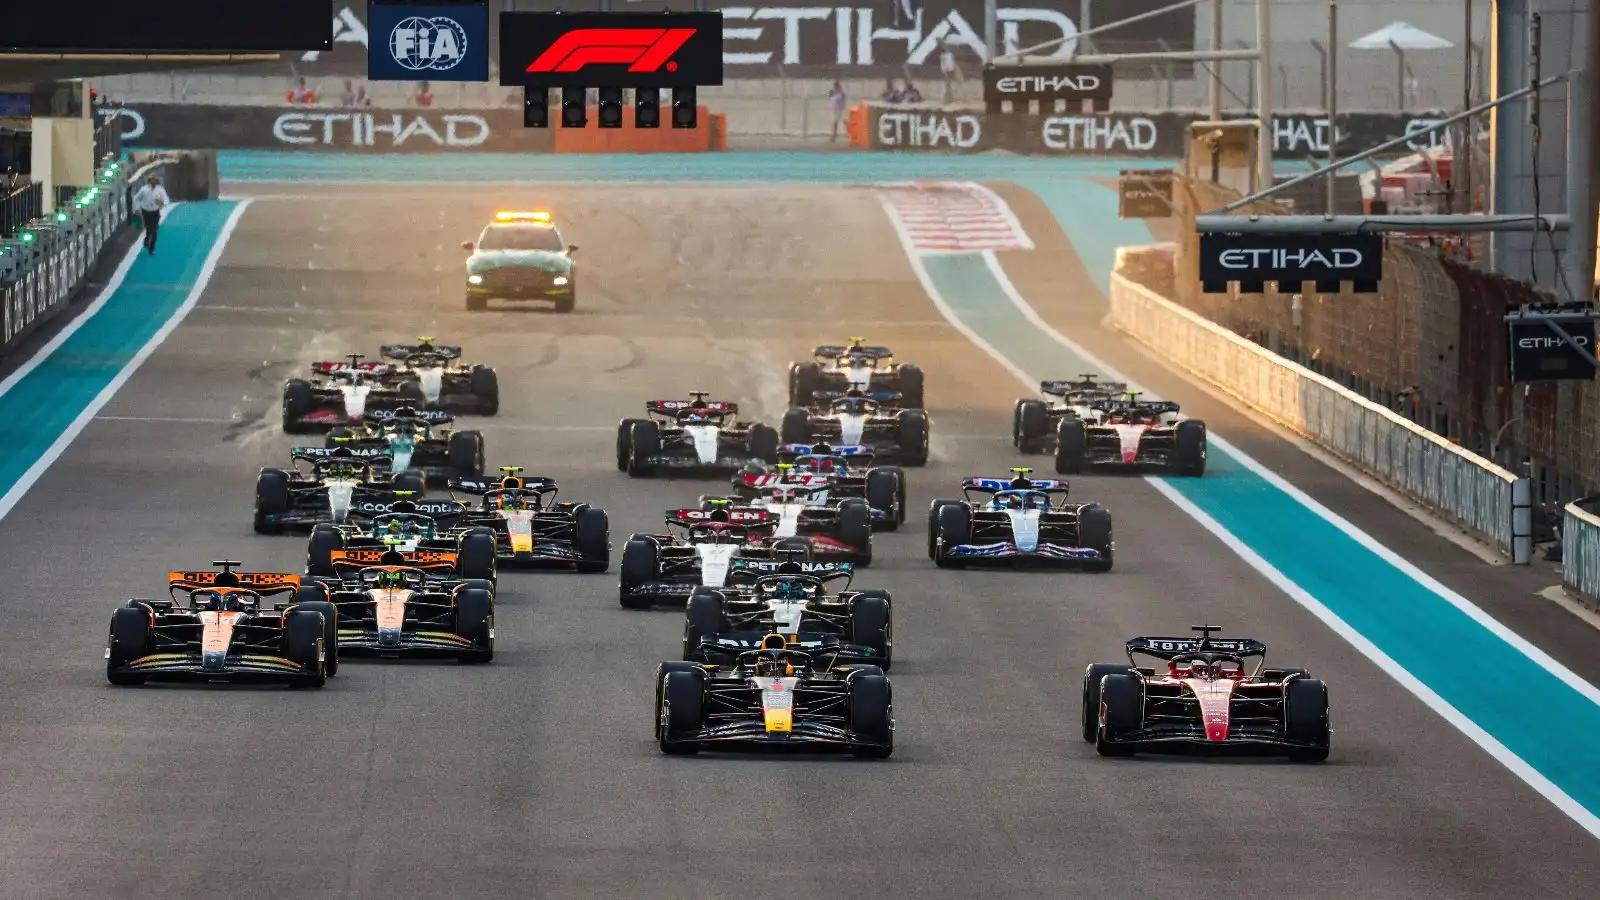 The F1 cars get away at the Abu Dhabi Grand Prix.